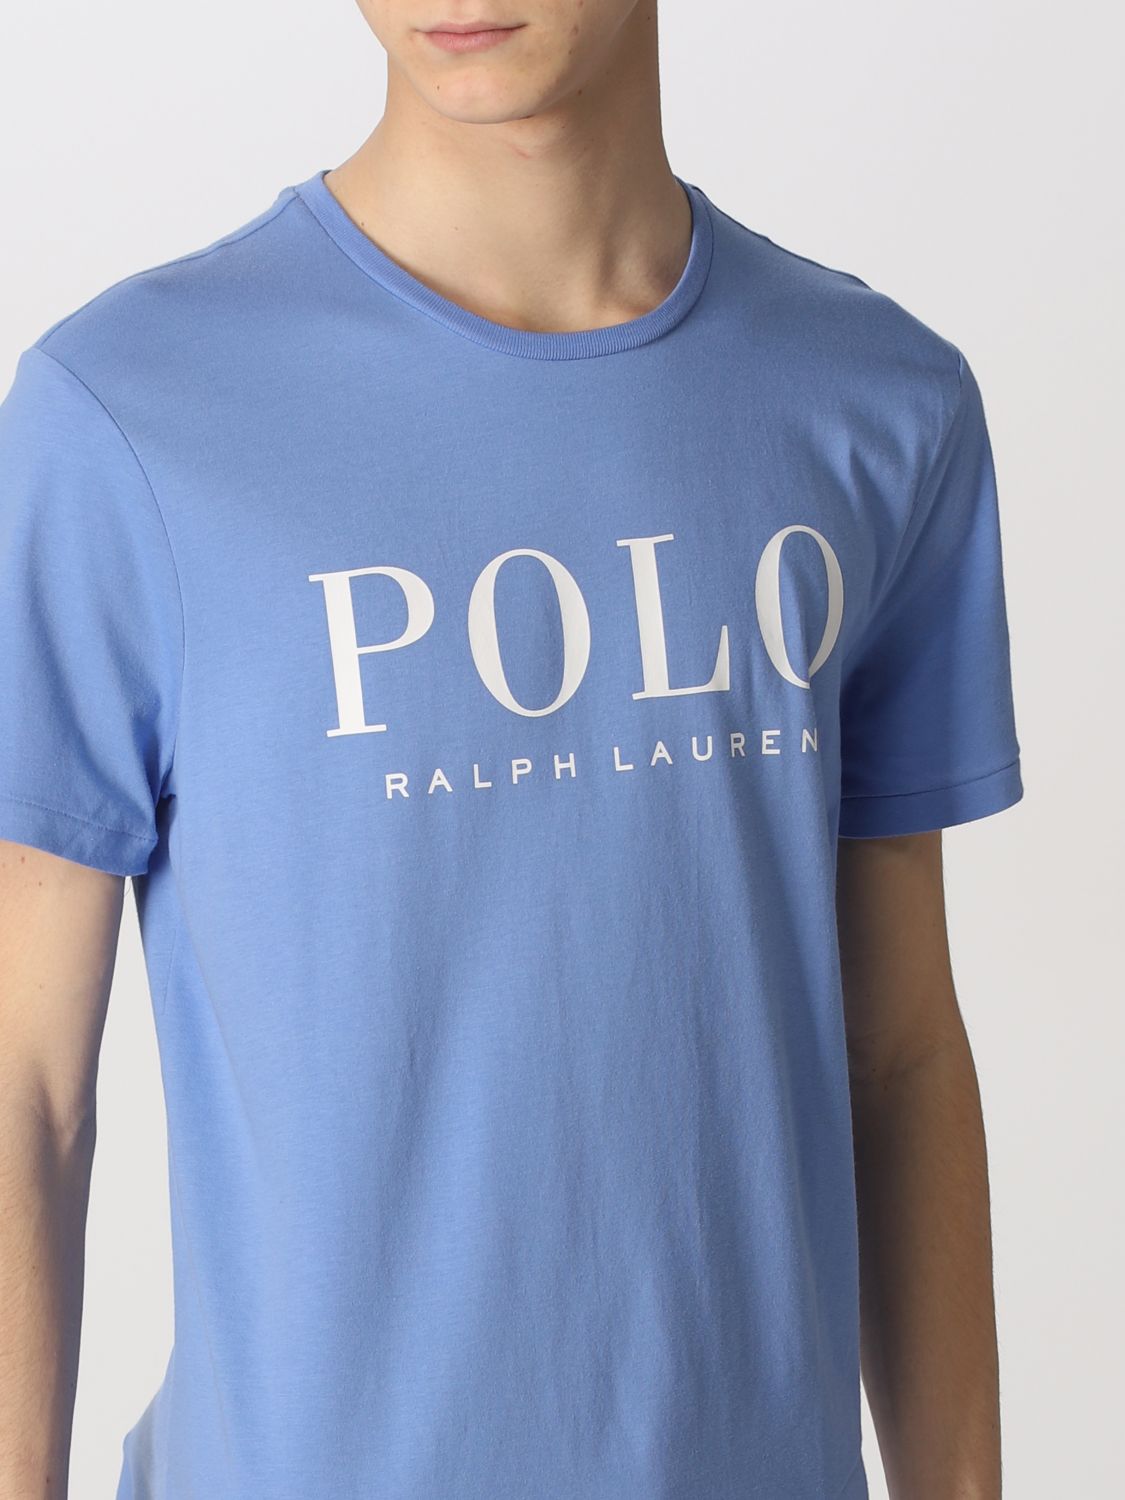 POLO RALPH LAUREN: cotton t-shirt with logo - Sky Blue | Polo Ralph Lauren t -shirt 710860829 online on 